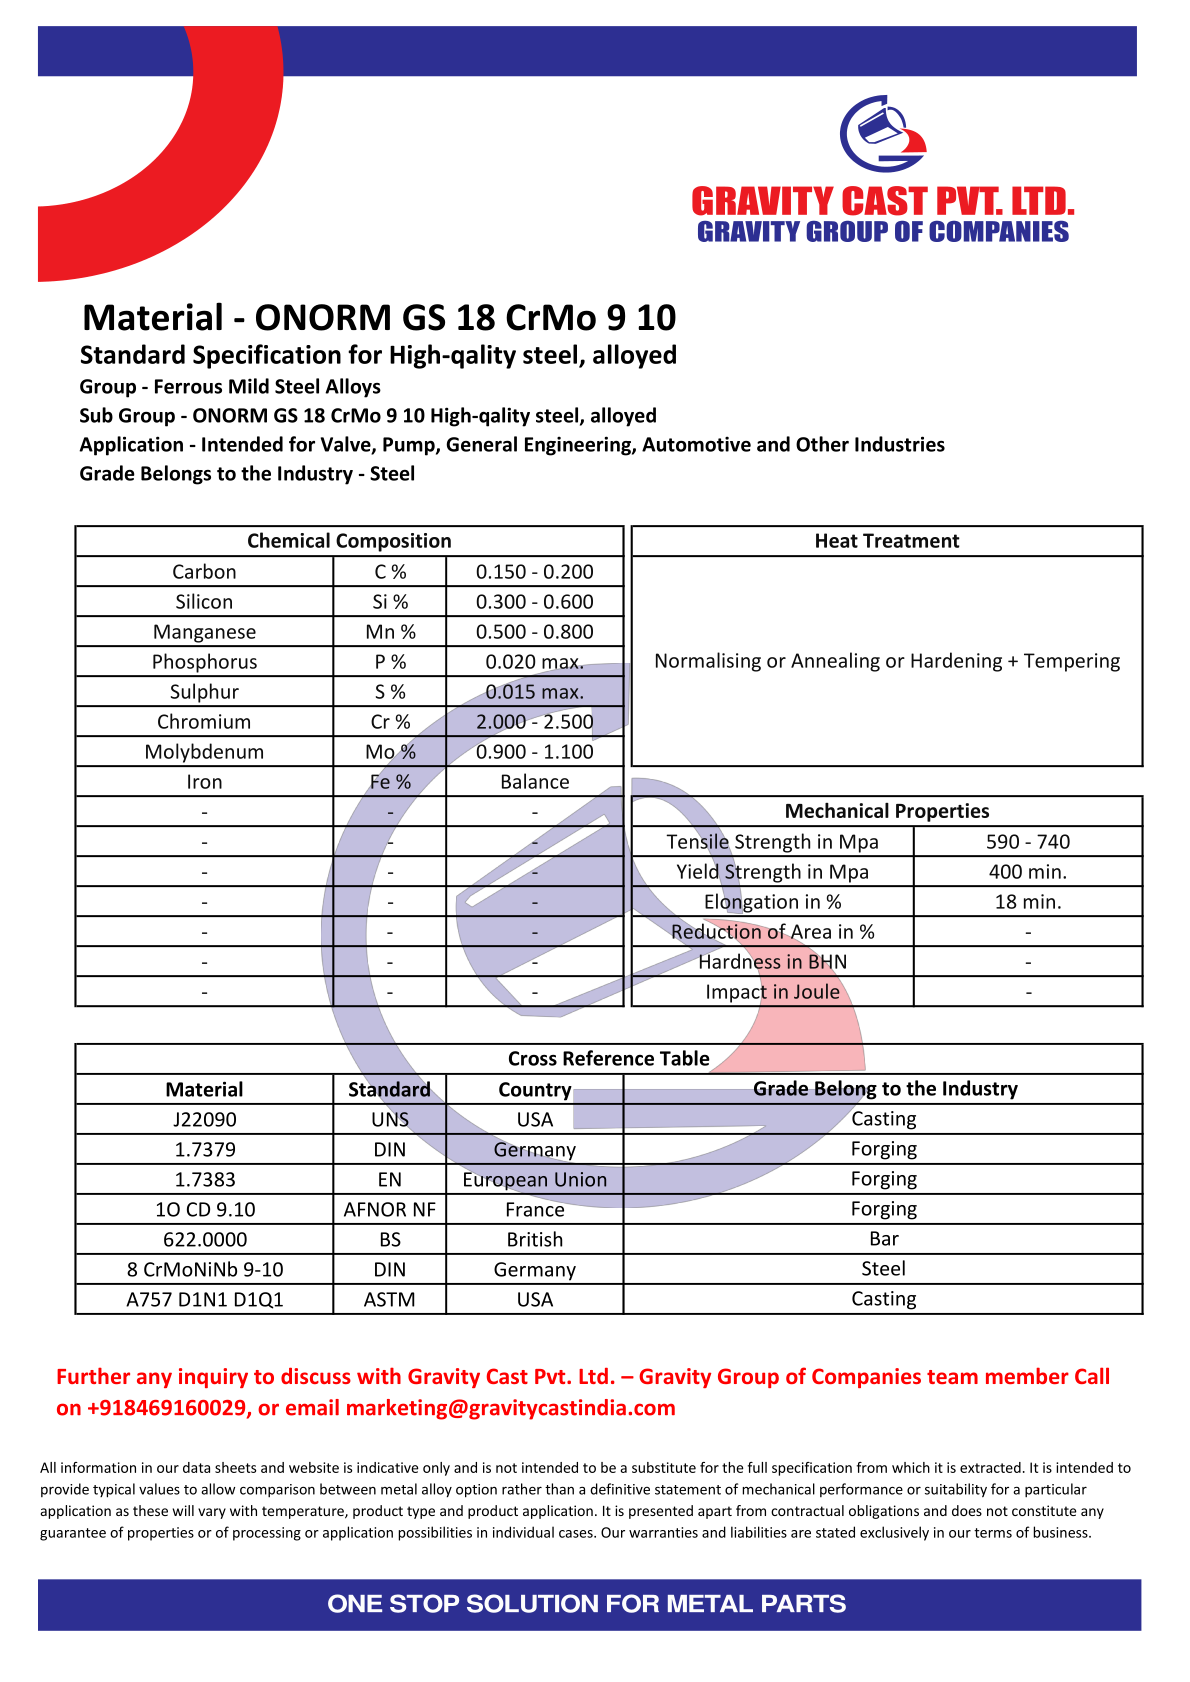 ONORM GS 18 CrMo 9 10.pdf